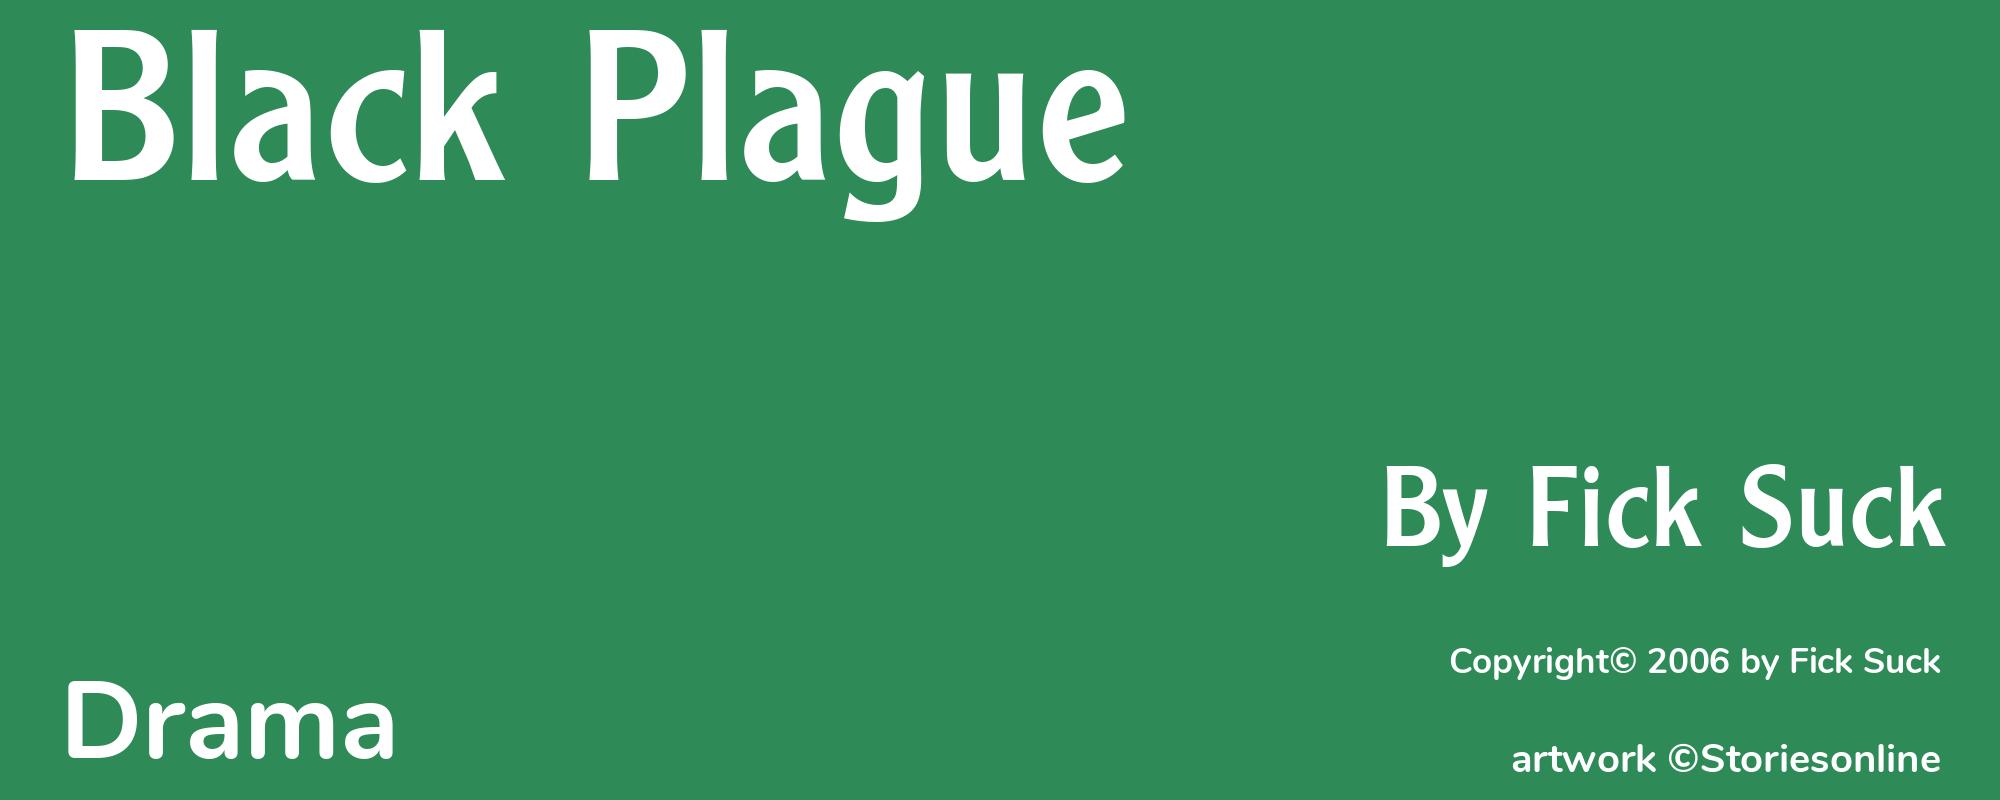 Black Plague - Cover